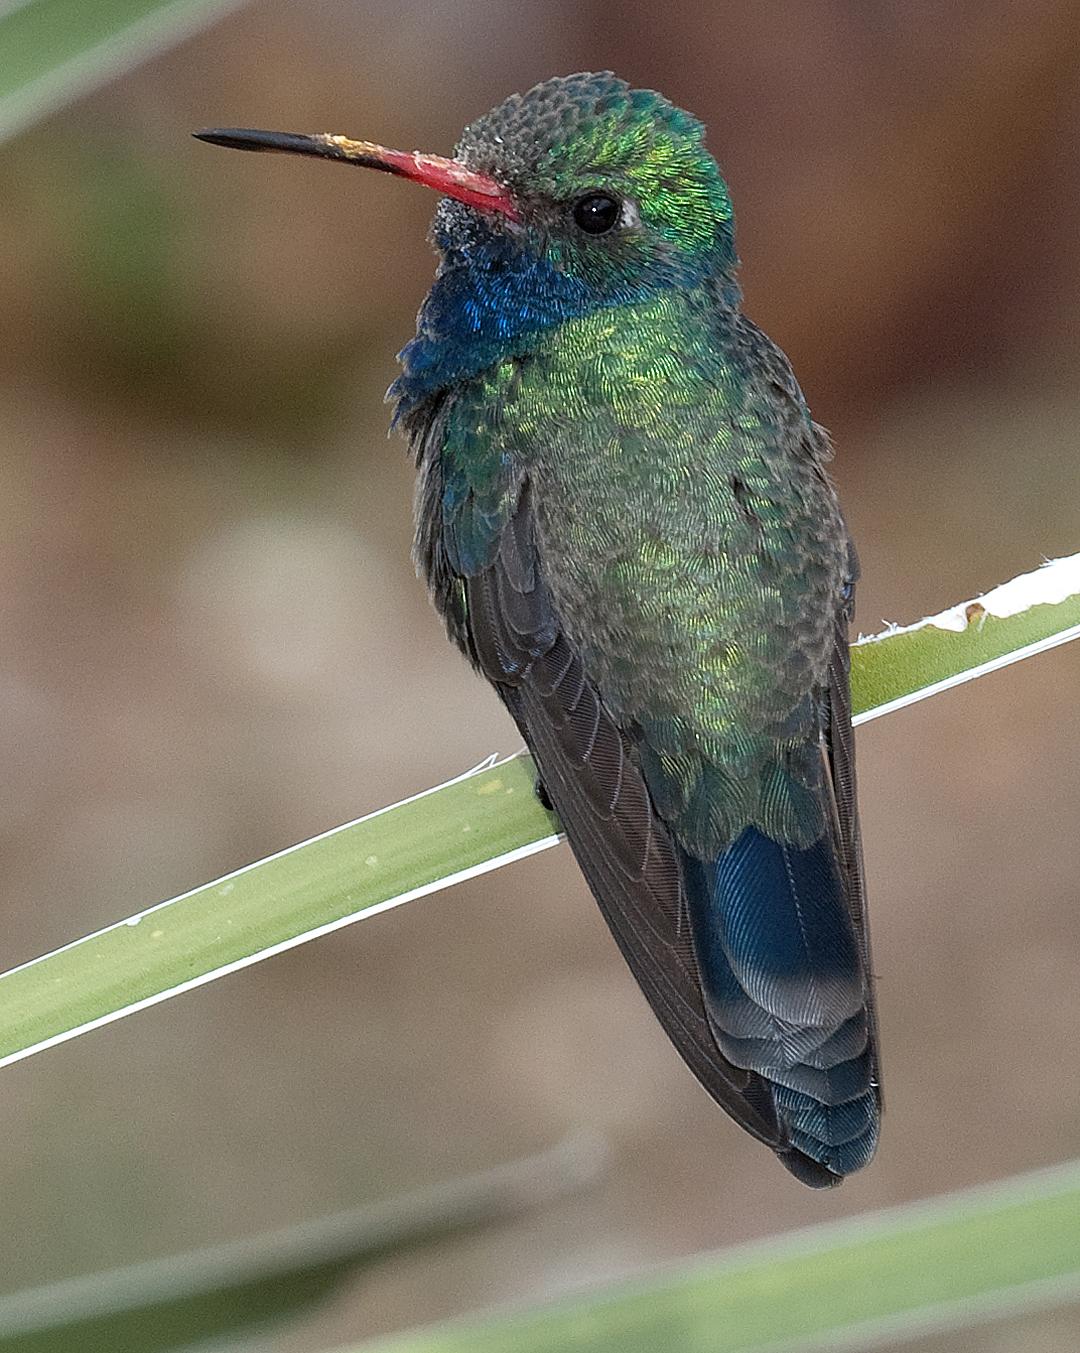 Broad-billed Hummingbird Photo by Robert Behrstock